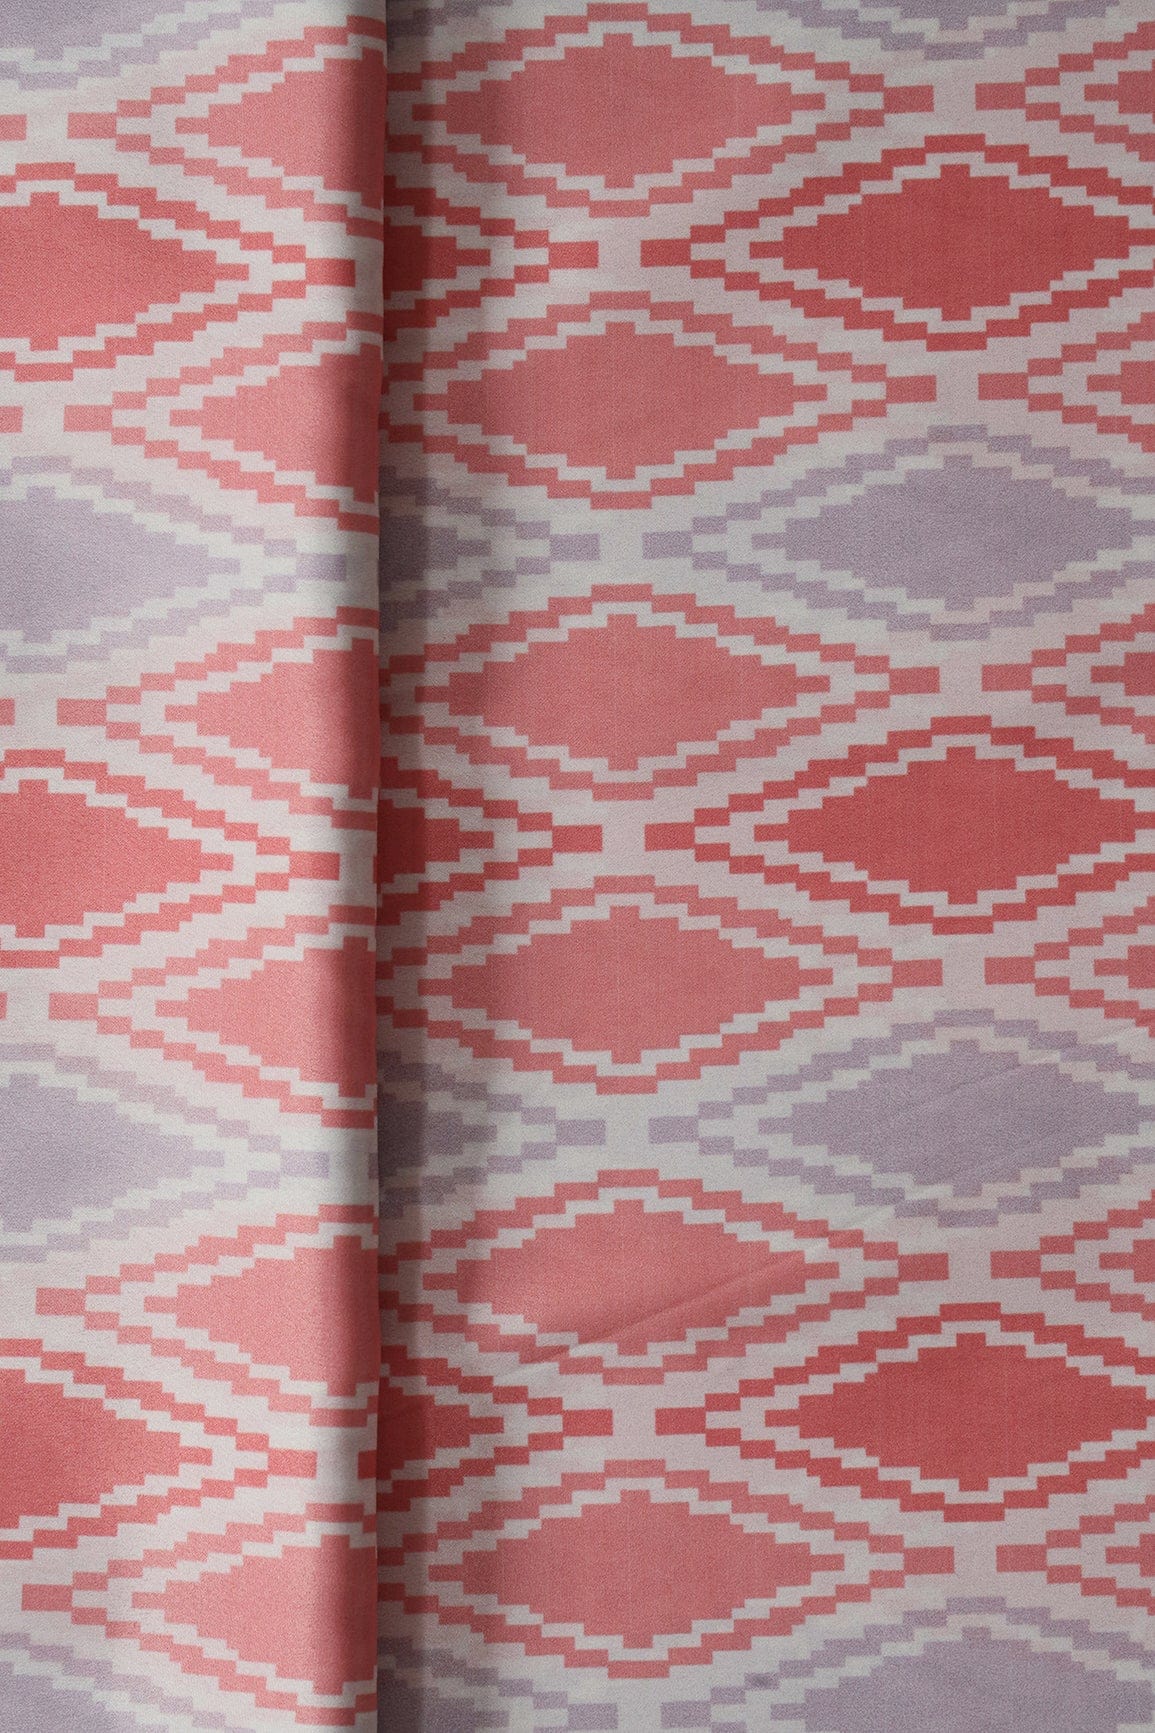 doeraa Prints Peach And Light Lavender Ikat Pattern Digital Print On French Crepe Fabric